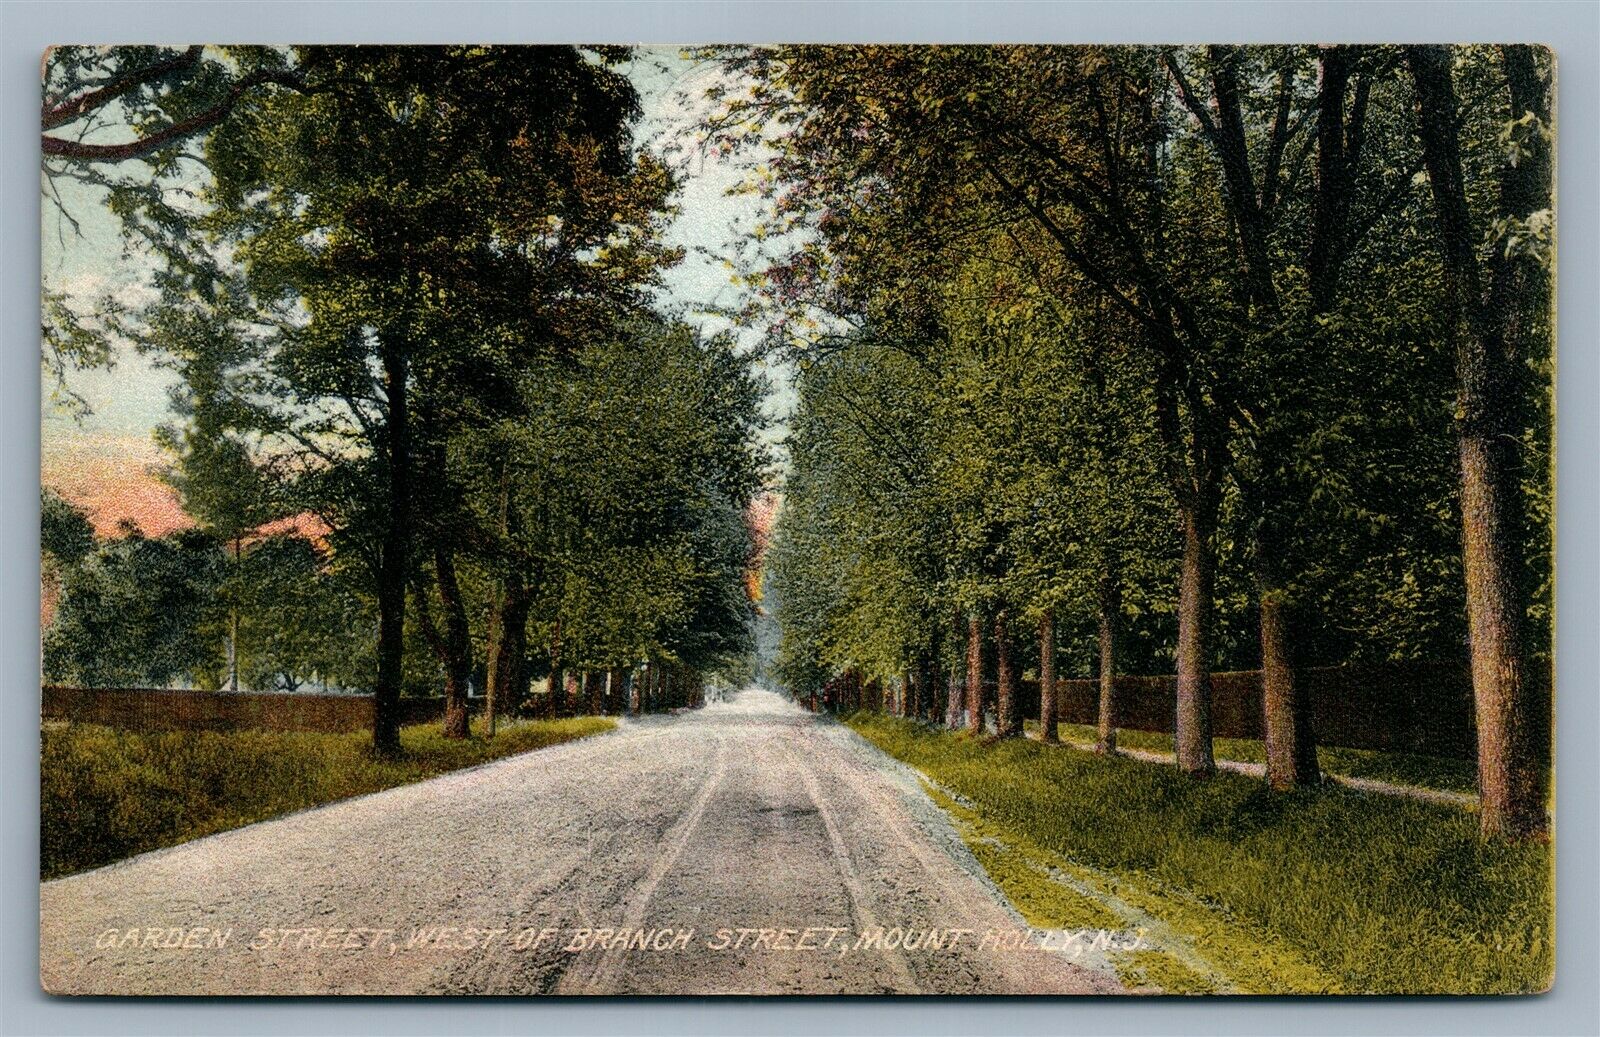 Mount Holly Garden Street - c 1910